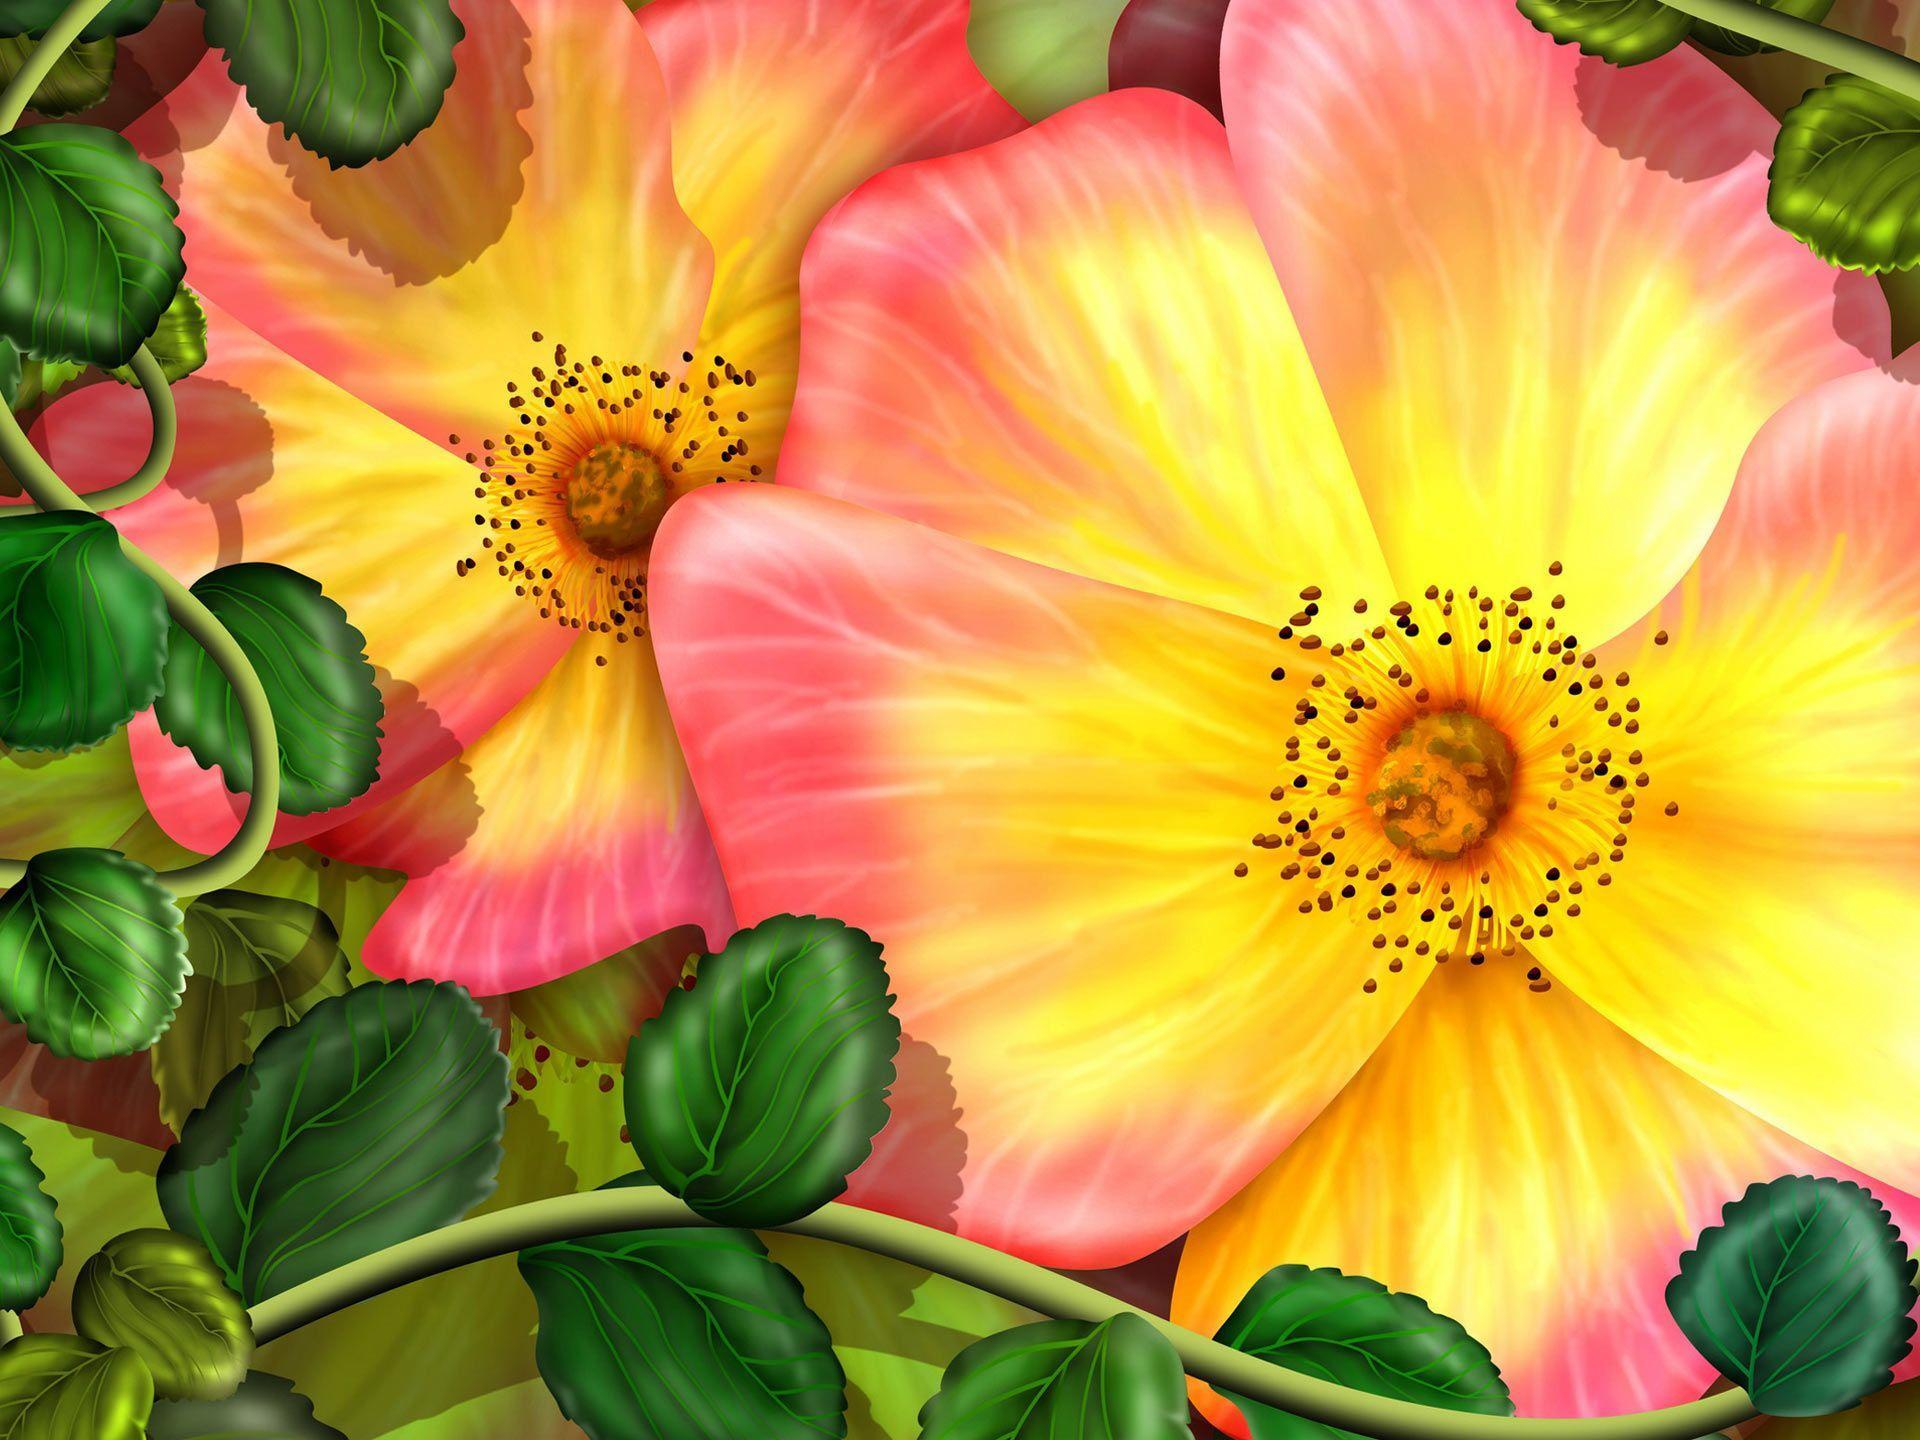 Desktop Wallpaper · Gallery · Windows 7 · Exotic flowers. Free